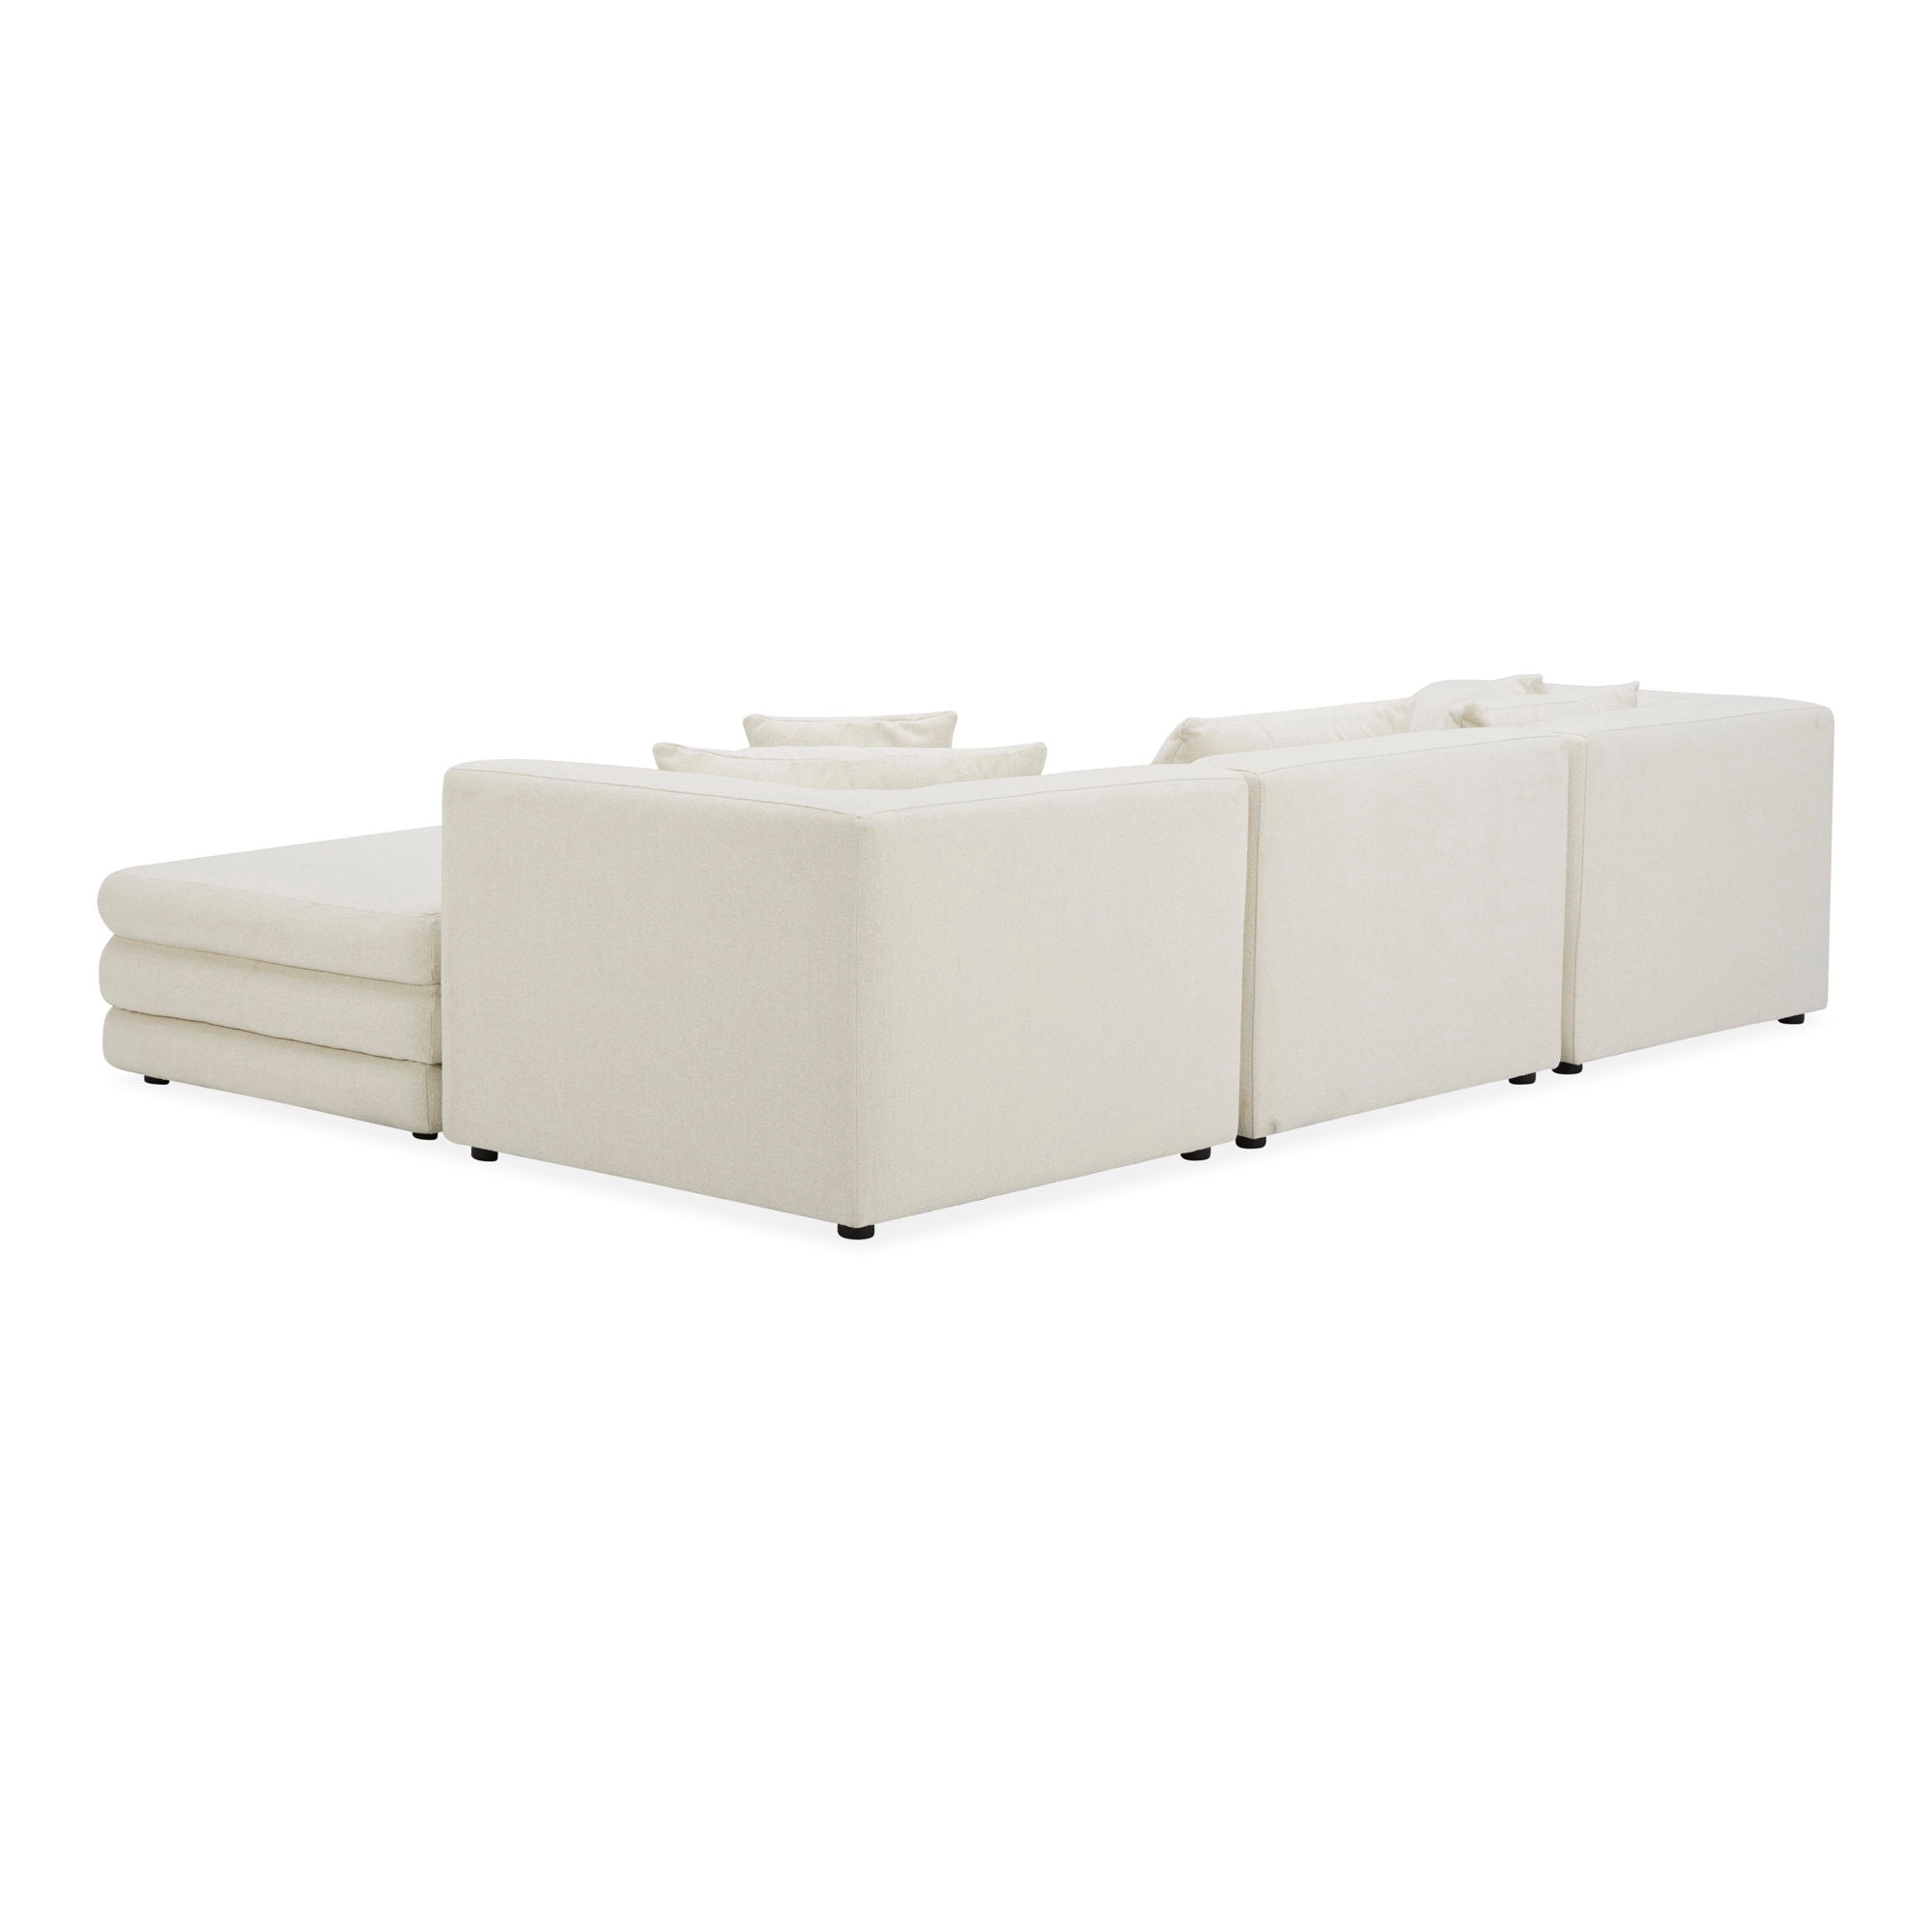 Lowtide - Lounge Modular Sectional - Warm White